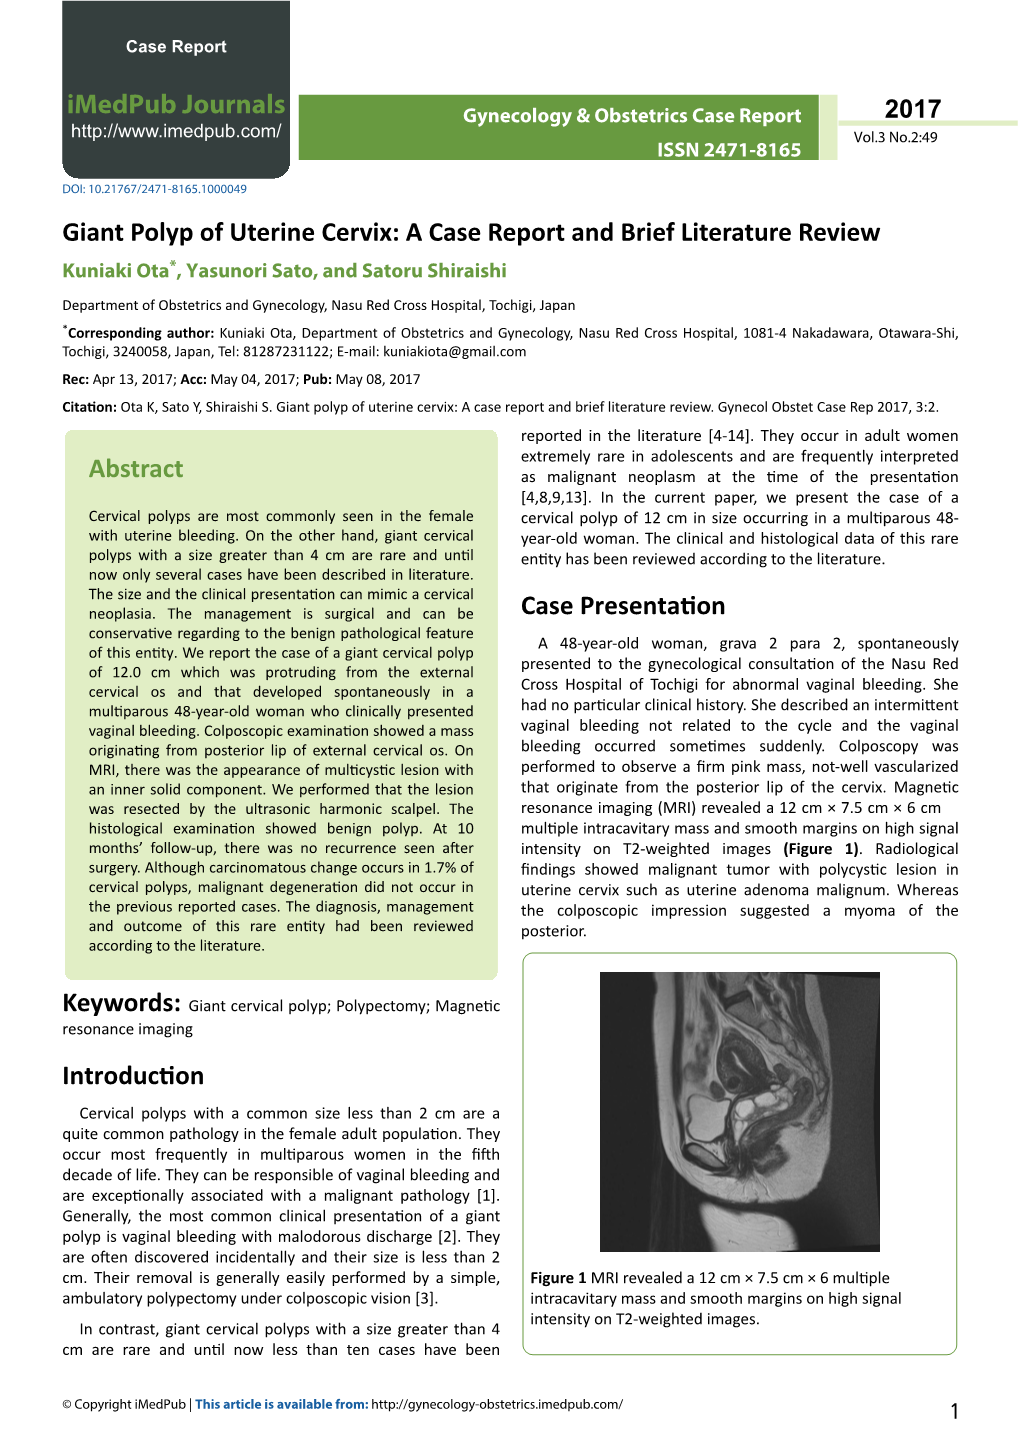 Giant Polyp of Uterine Cervix: a Case Report and Brief Literature Review Kuniaki Ota*, Yasunori Sato, and Satoru Shiraishi